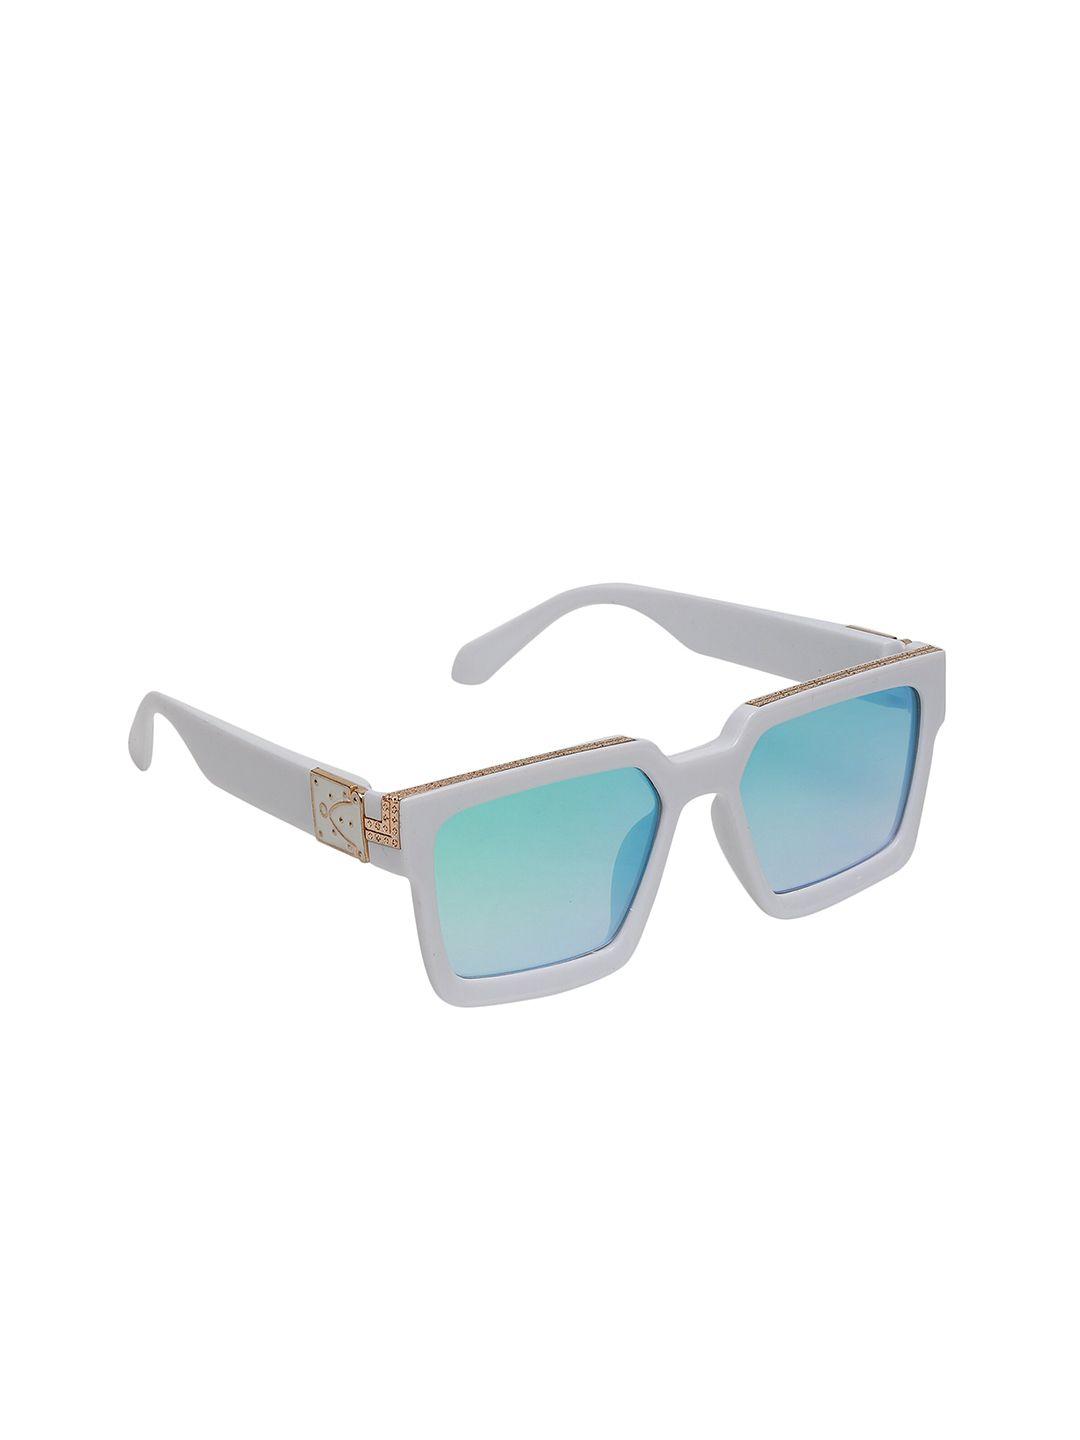 celebrity sunglasses unisex blue lens & white wayfarer sunglasses with uv protected lens